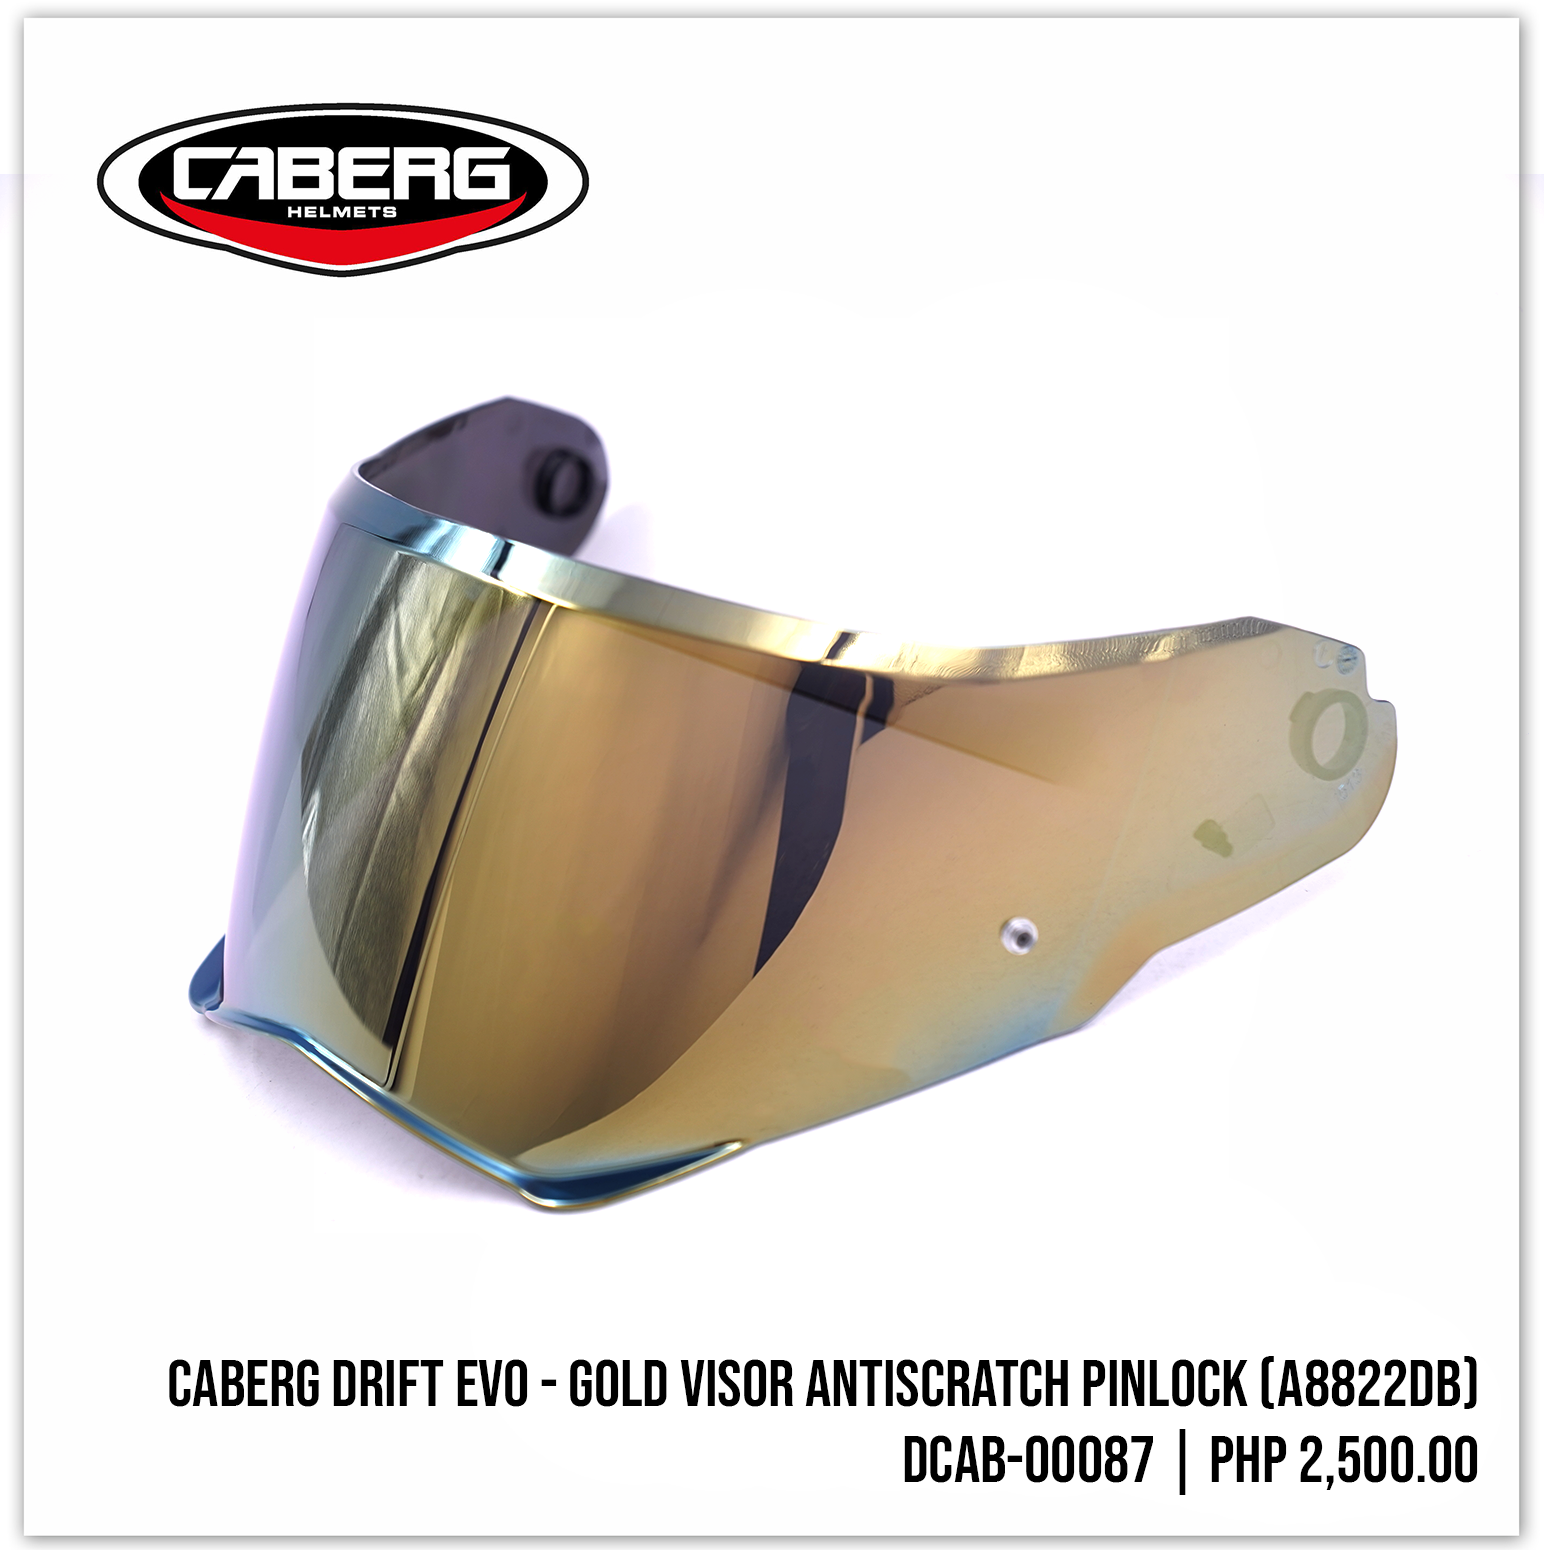 Caberg Drift Evo - Gold Visor Antiscratch Pinlock (A8822DB)